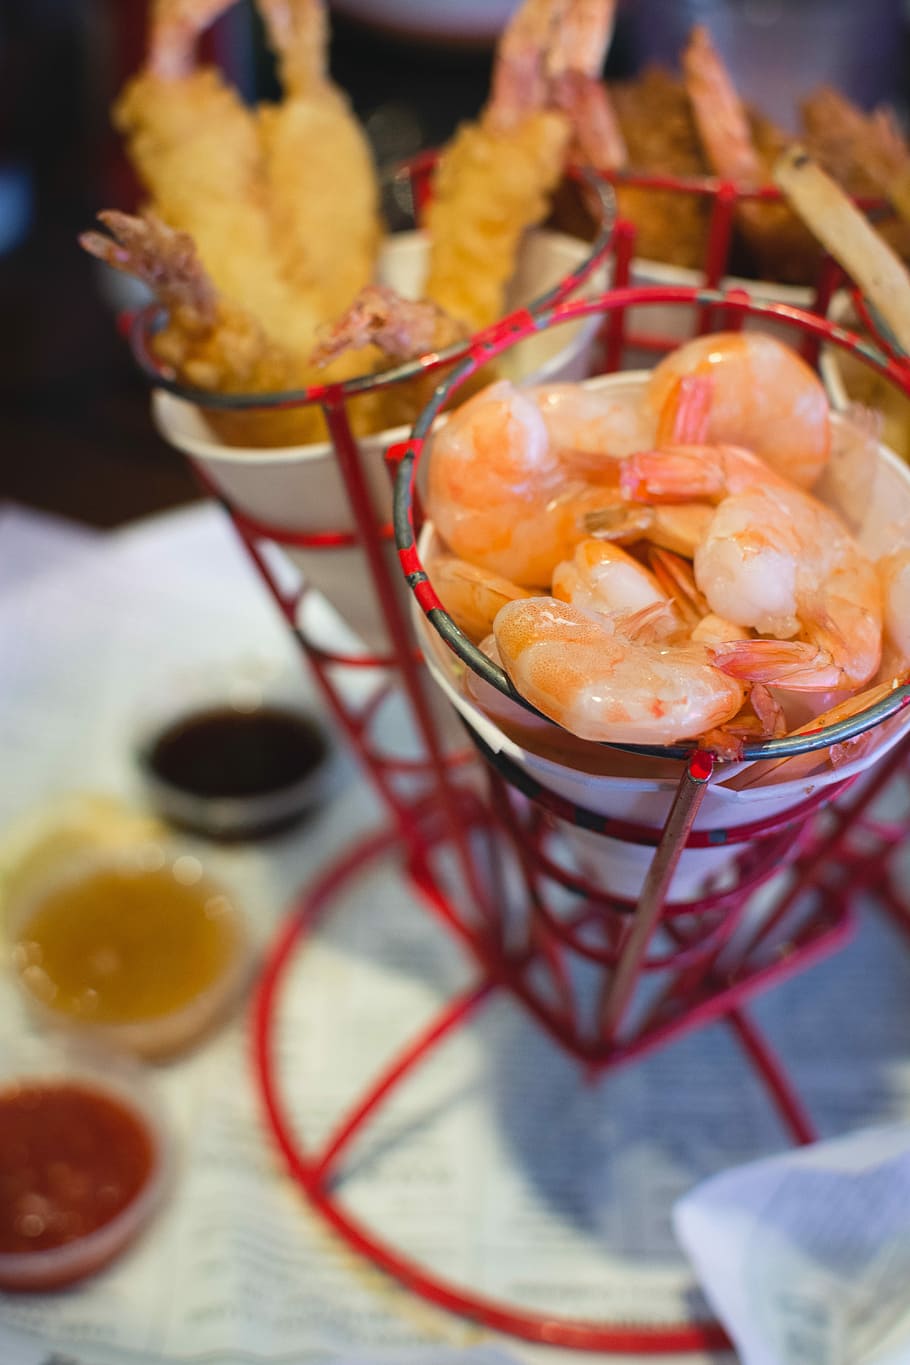 shrimp dishes, bubba gump restaurant, Shrimp, dishes, restaurant, close up, eating out, meat, shrimps, food